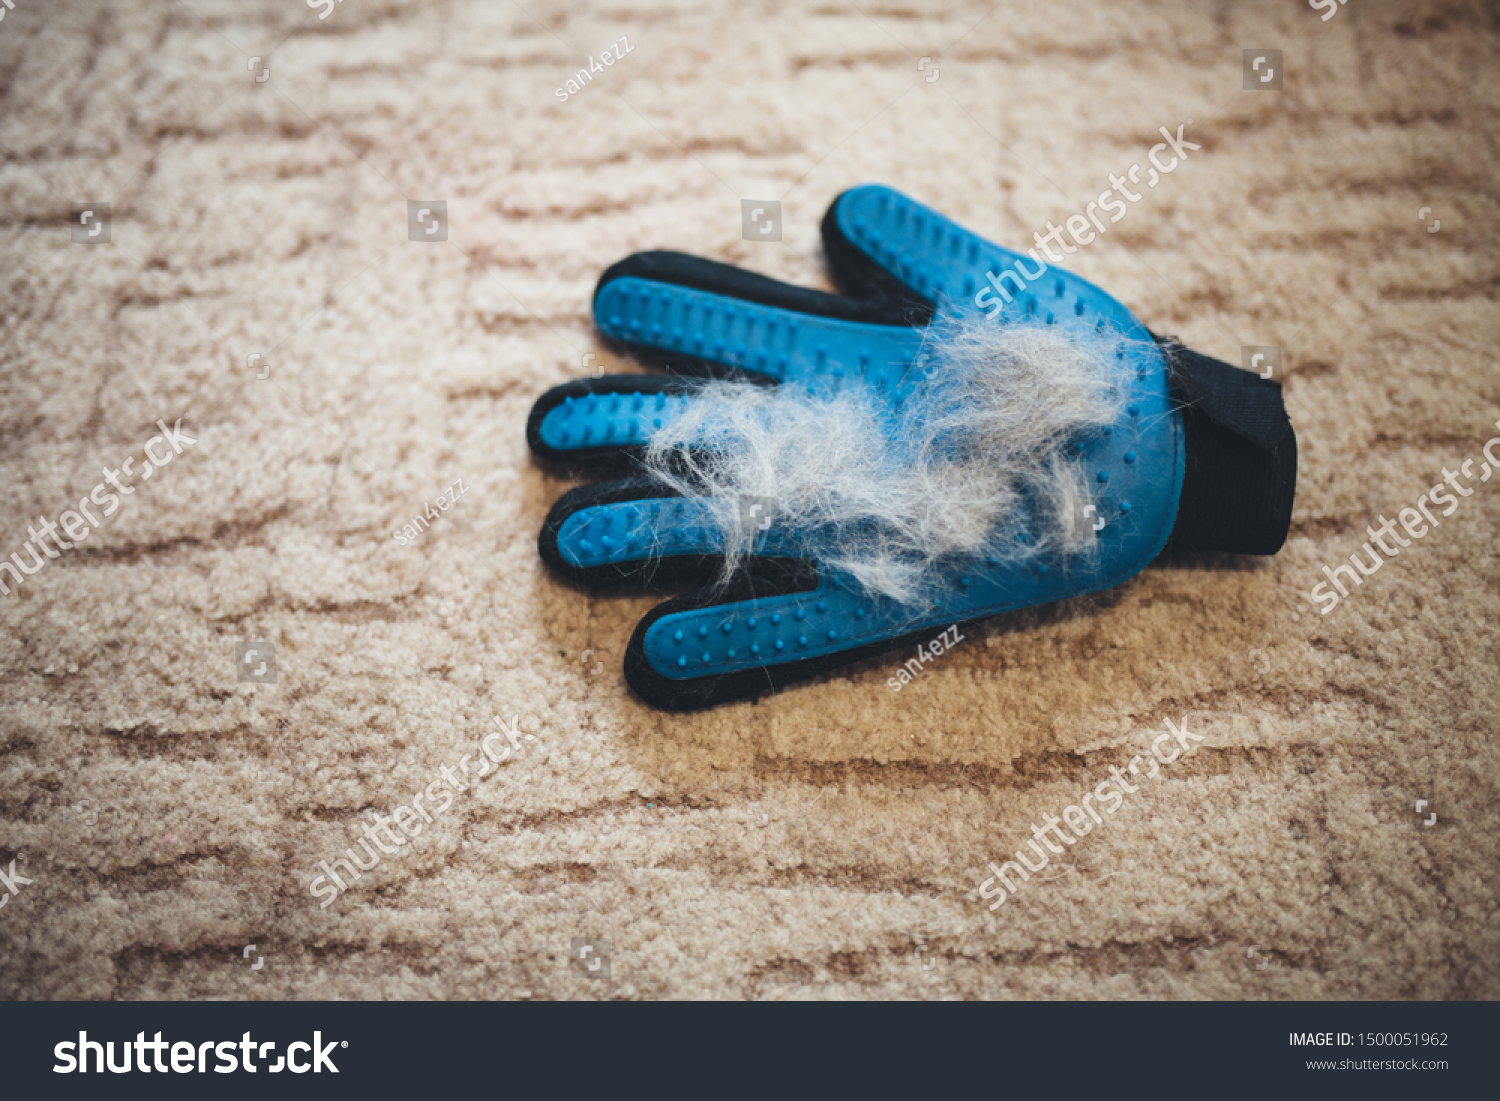 glove loss